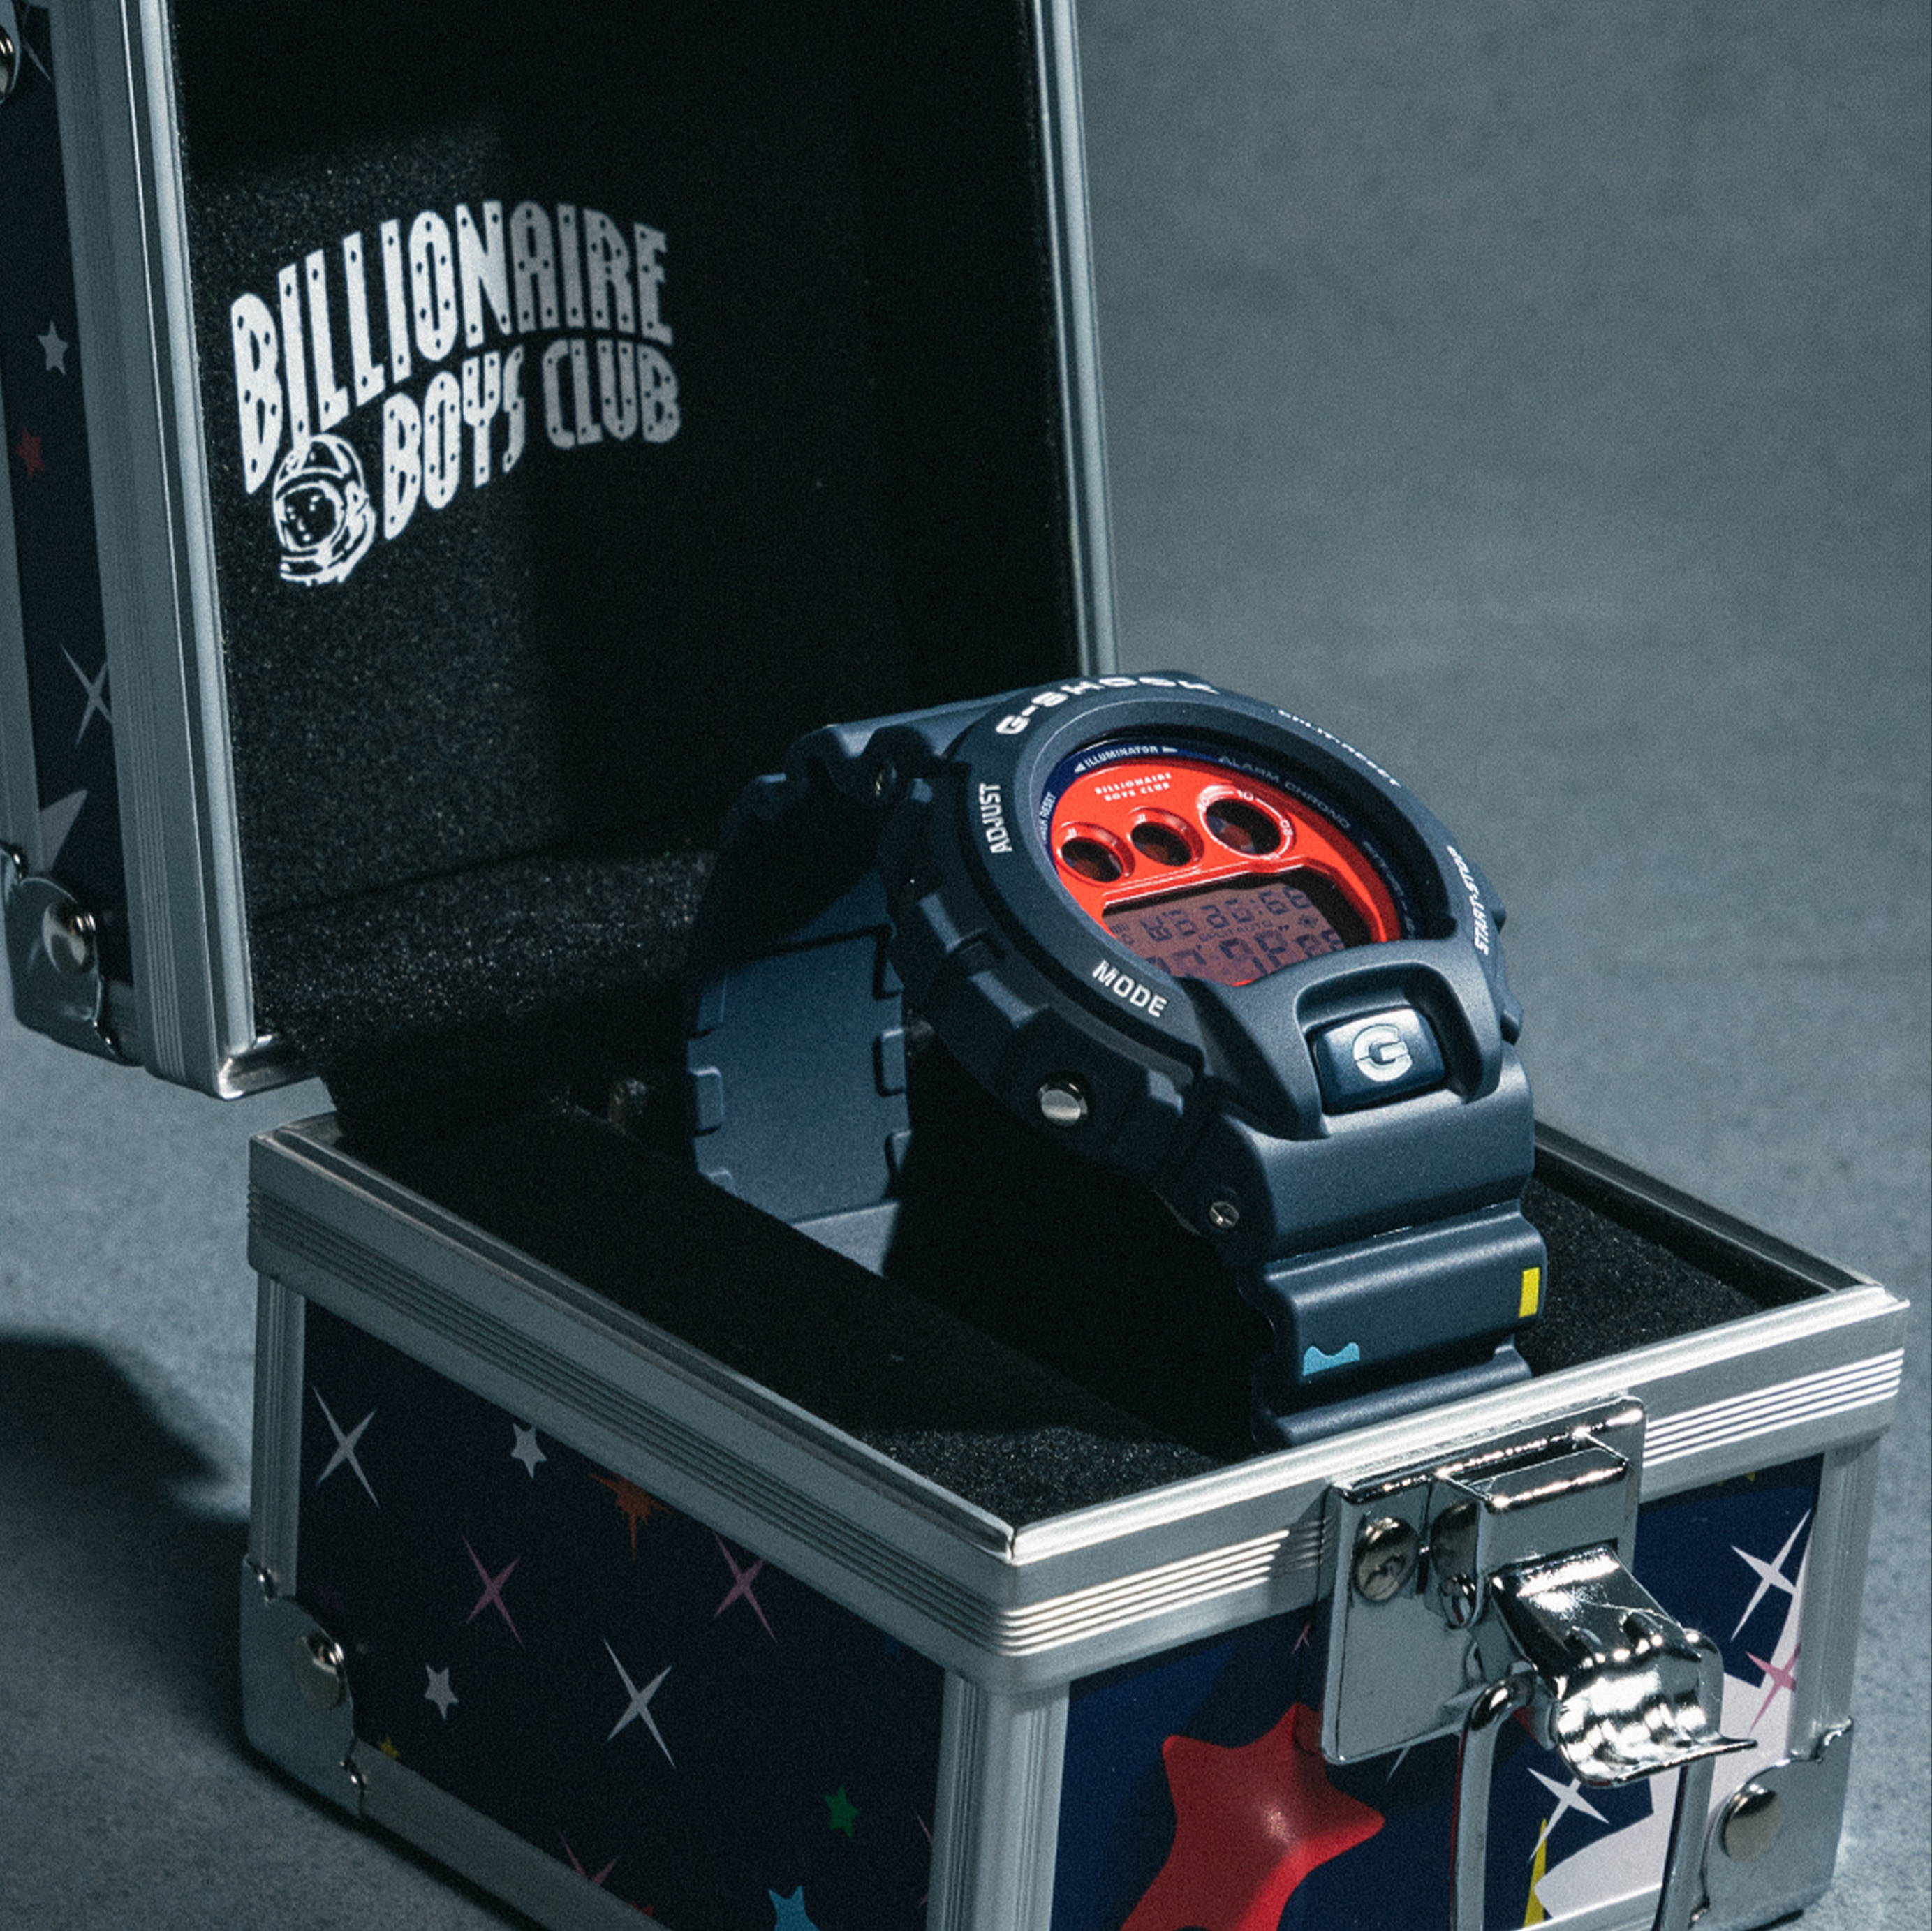 Casio G-Shock x Billionaire Boys Club Watch